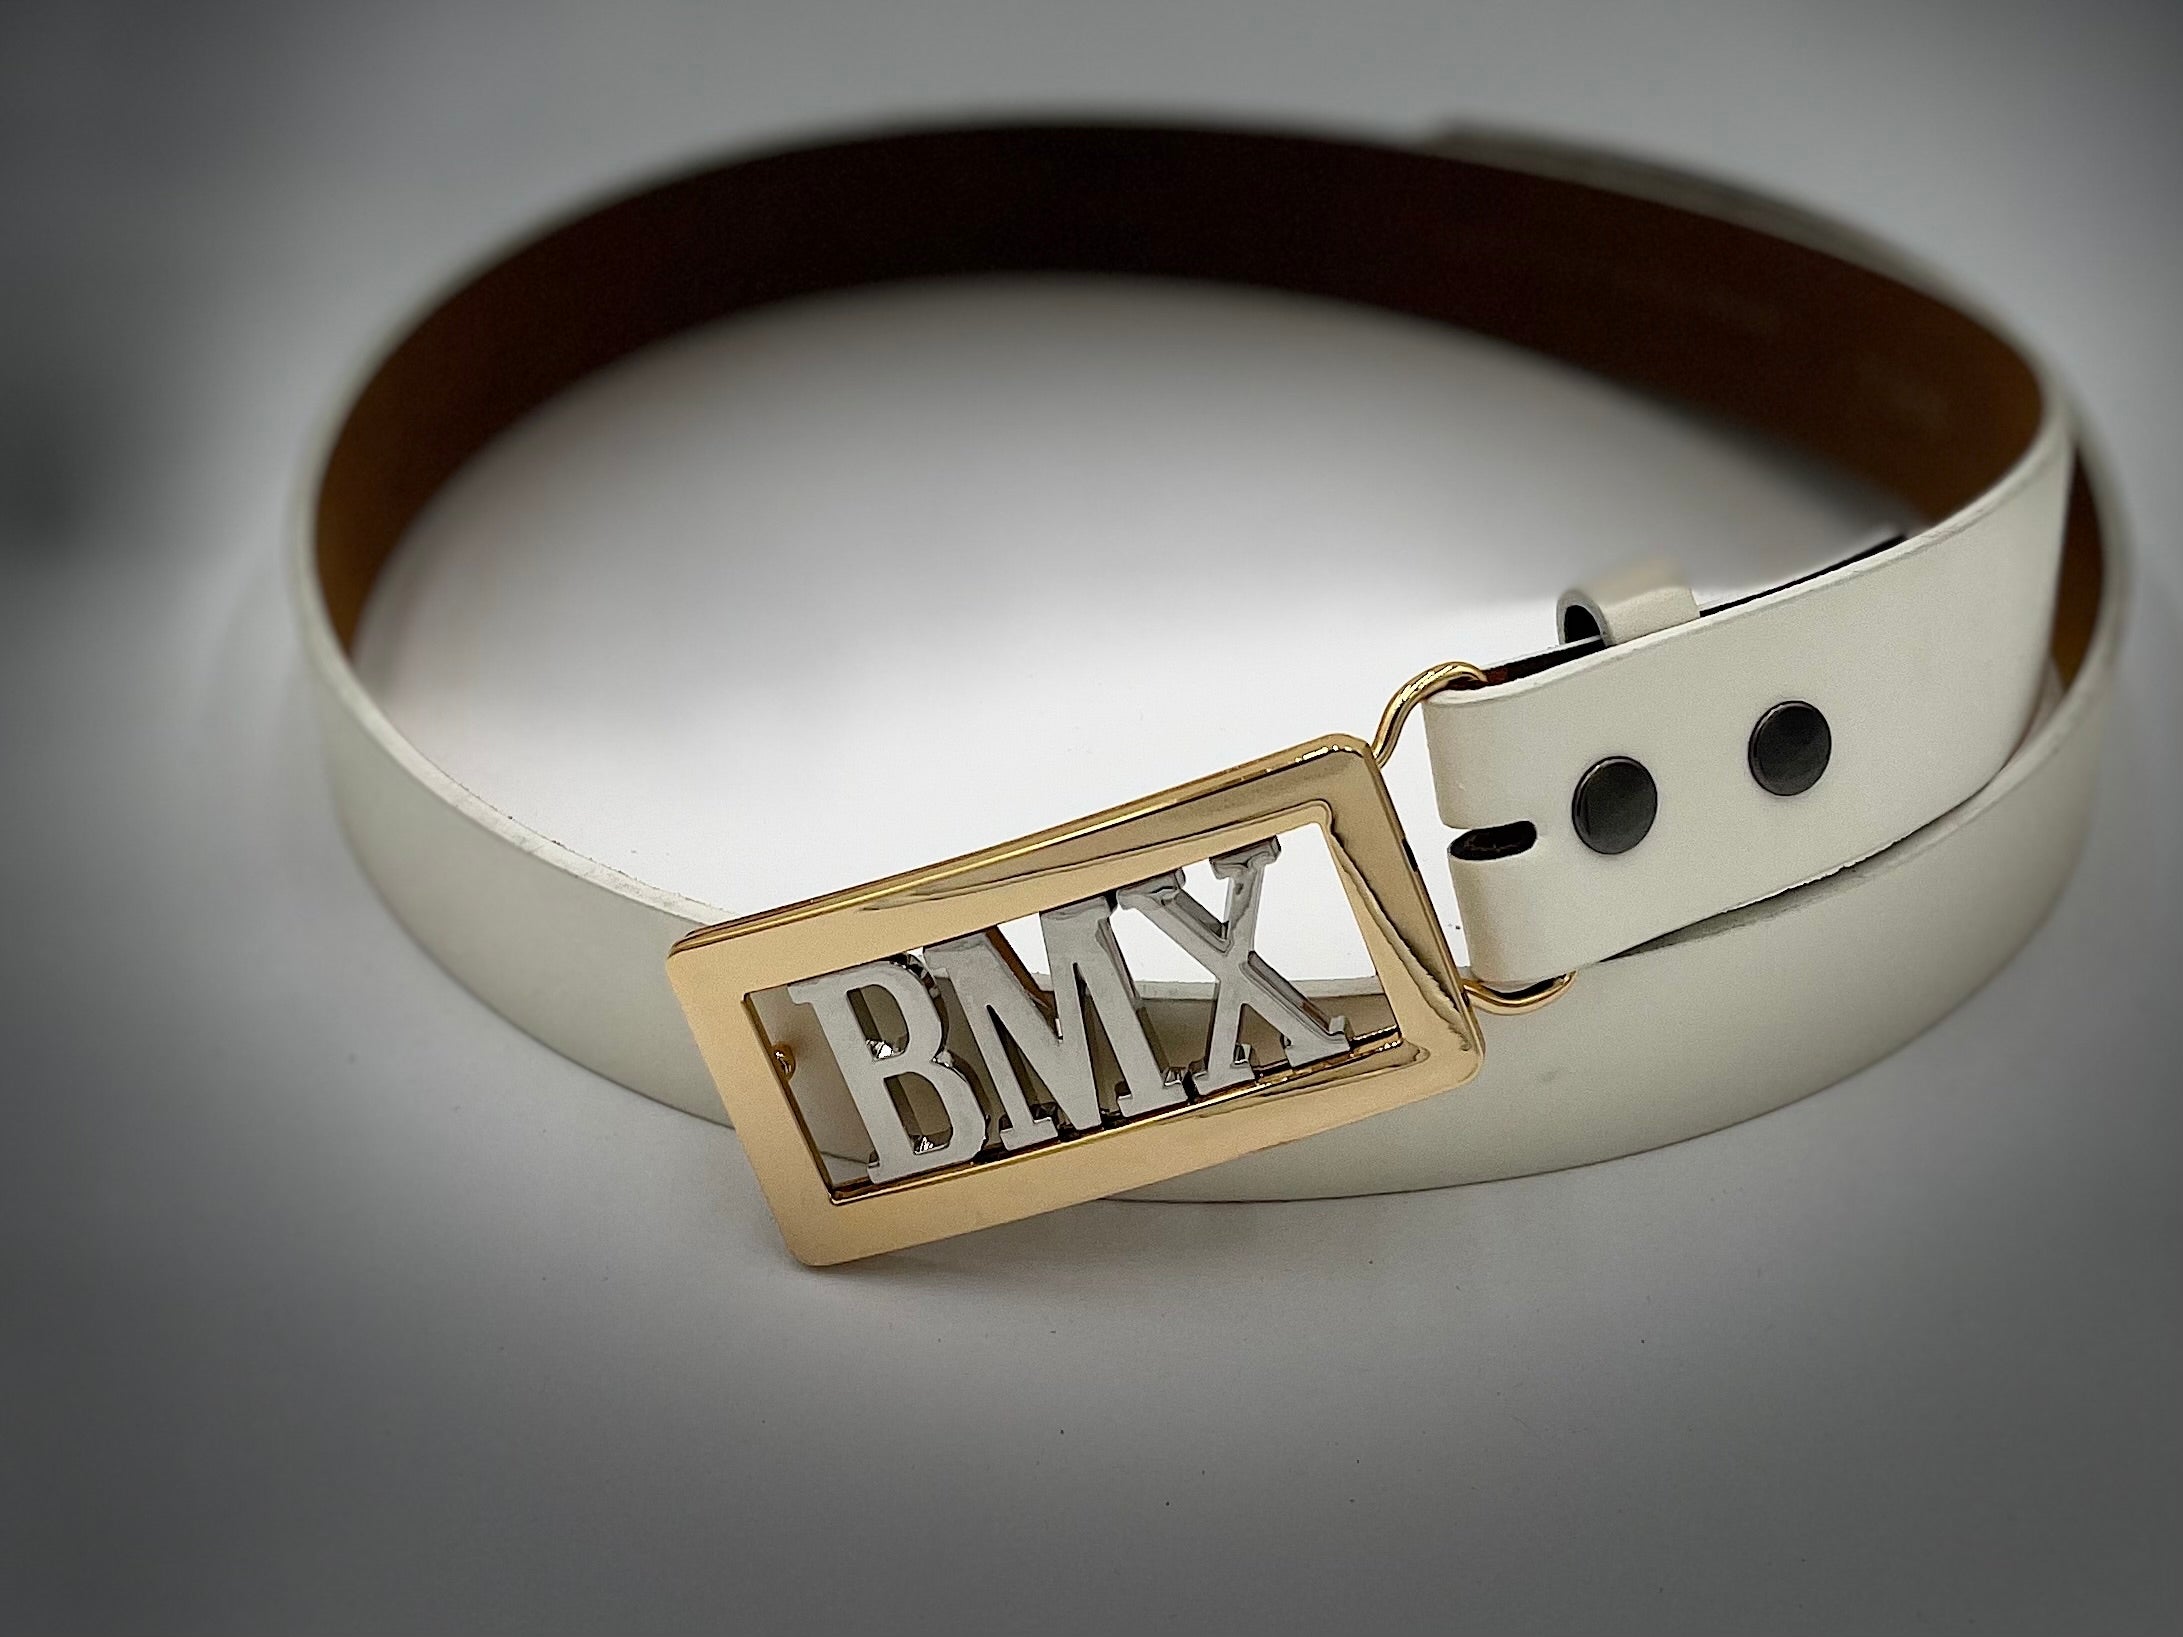 BMX custom belt buckle gold frame silver letters with free belt